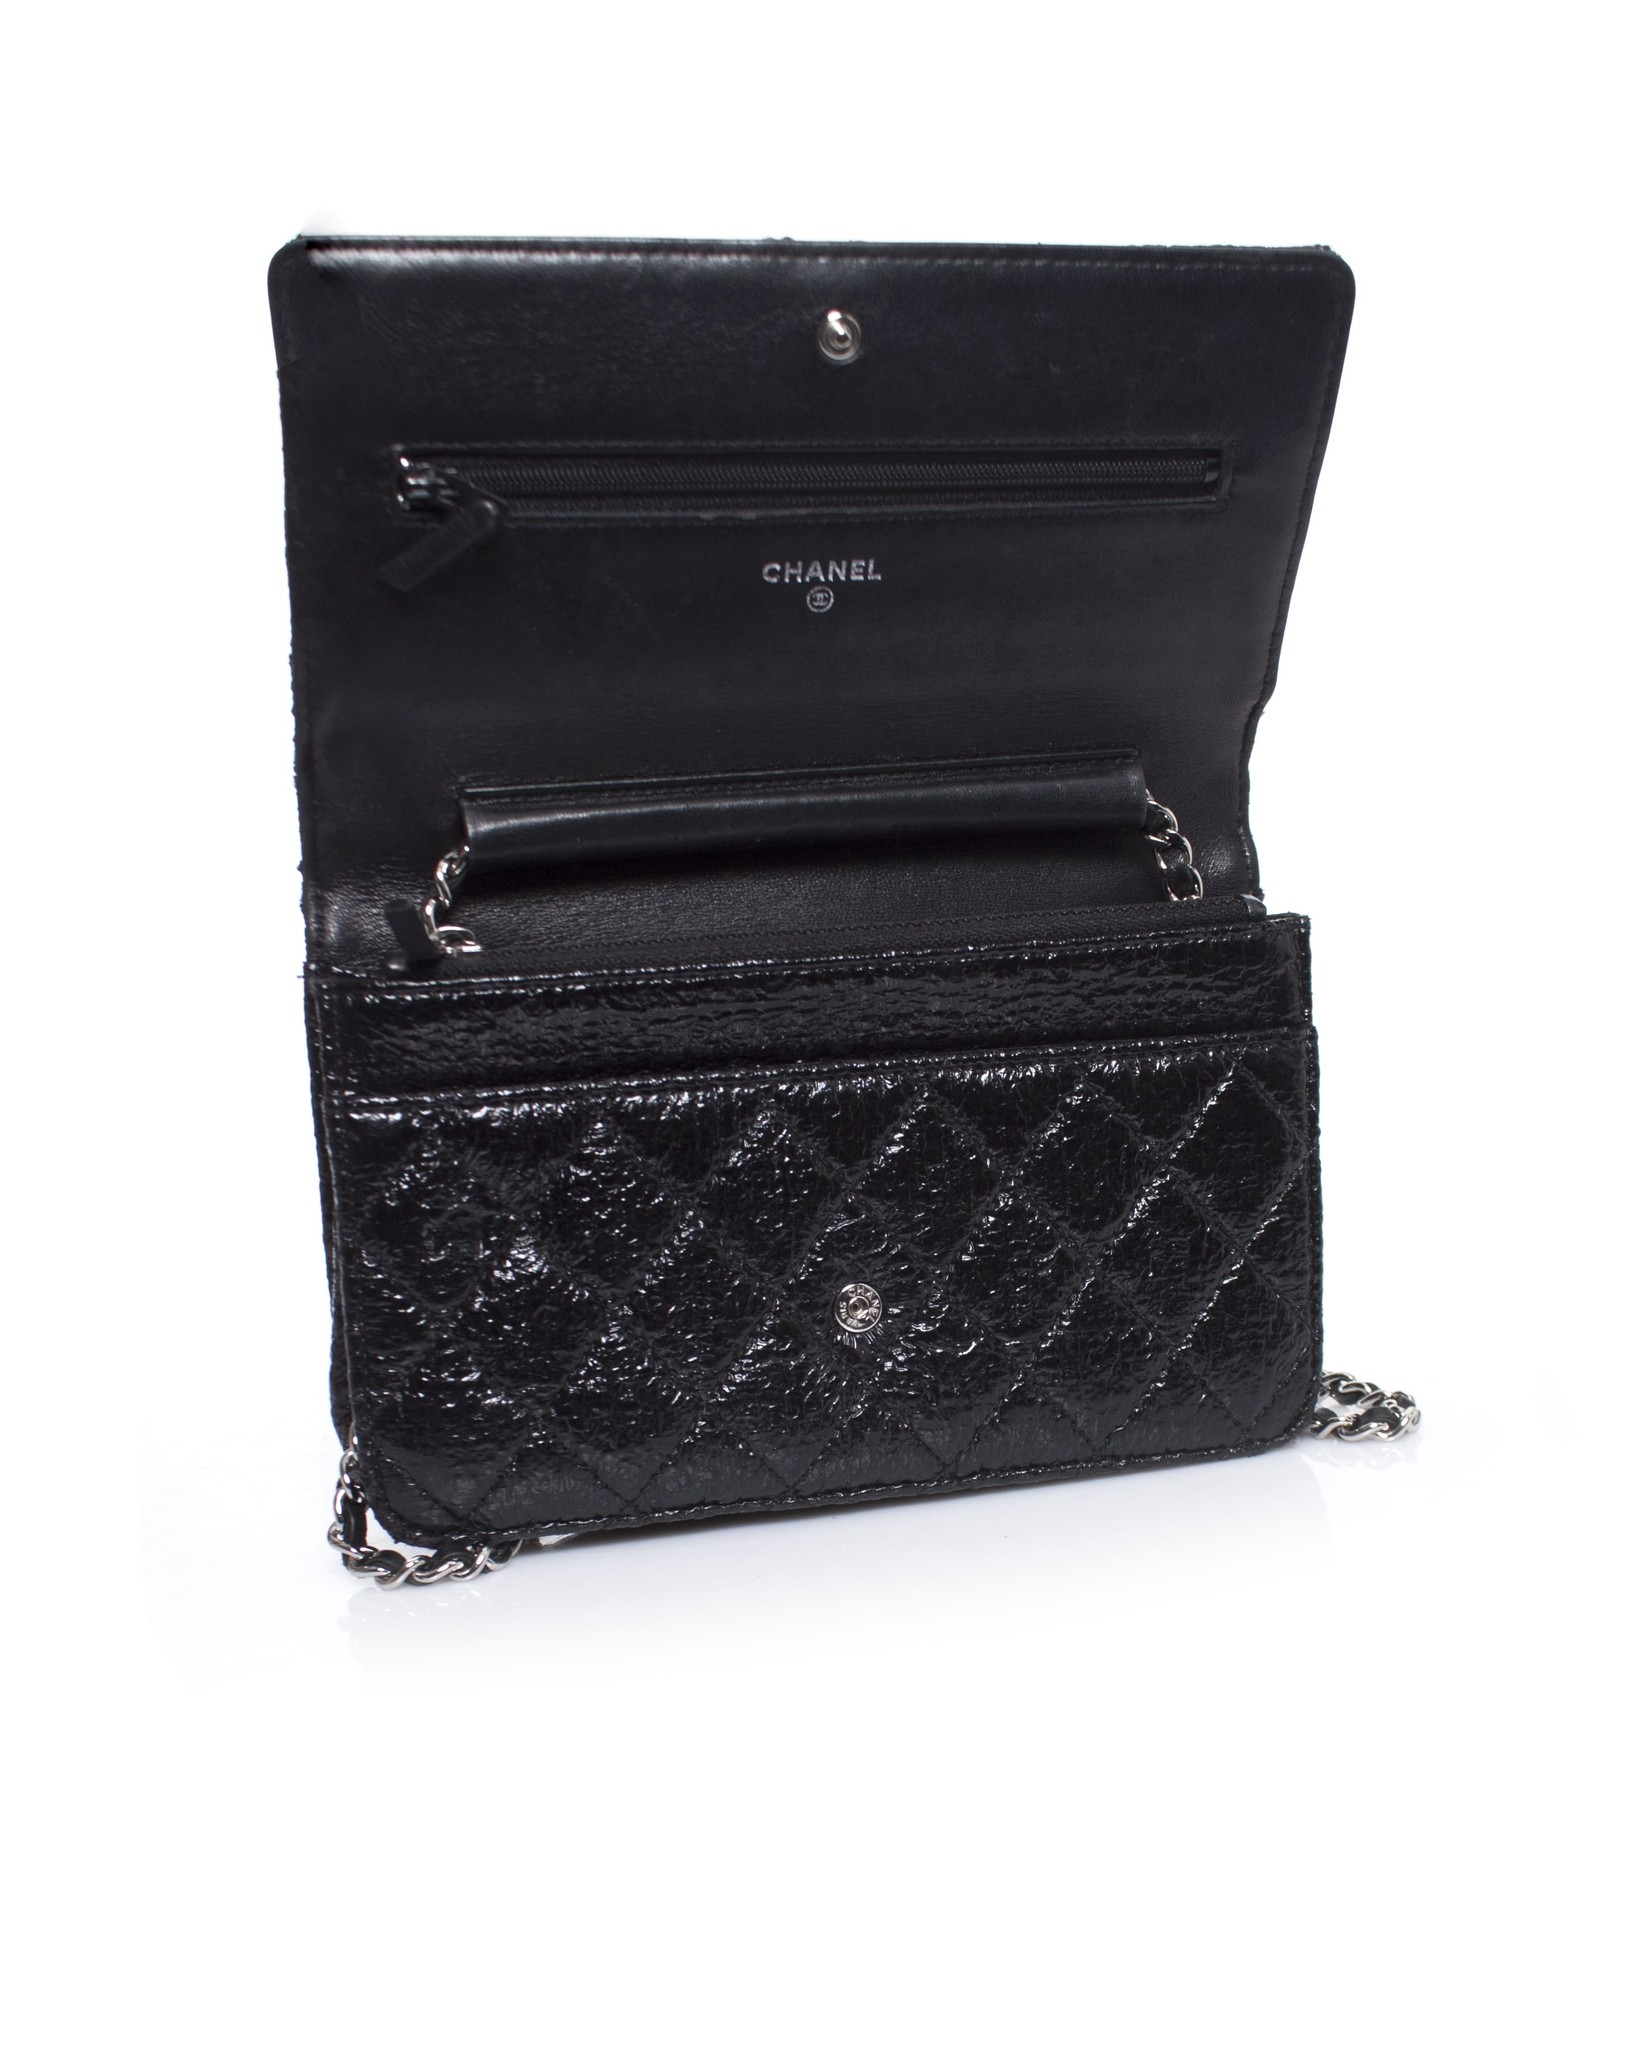 Chanel Beige Chevron Patent Leather Classic WOC Clutch Bag Chanel